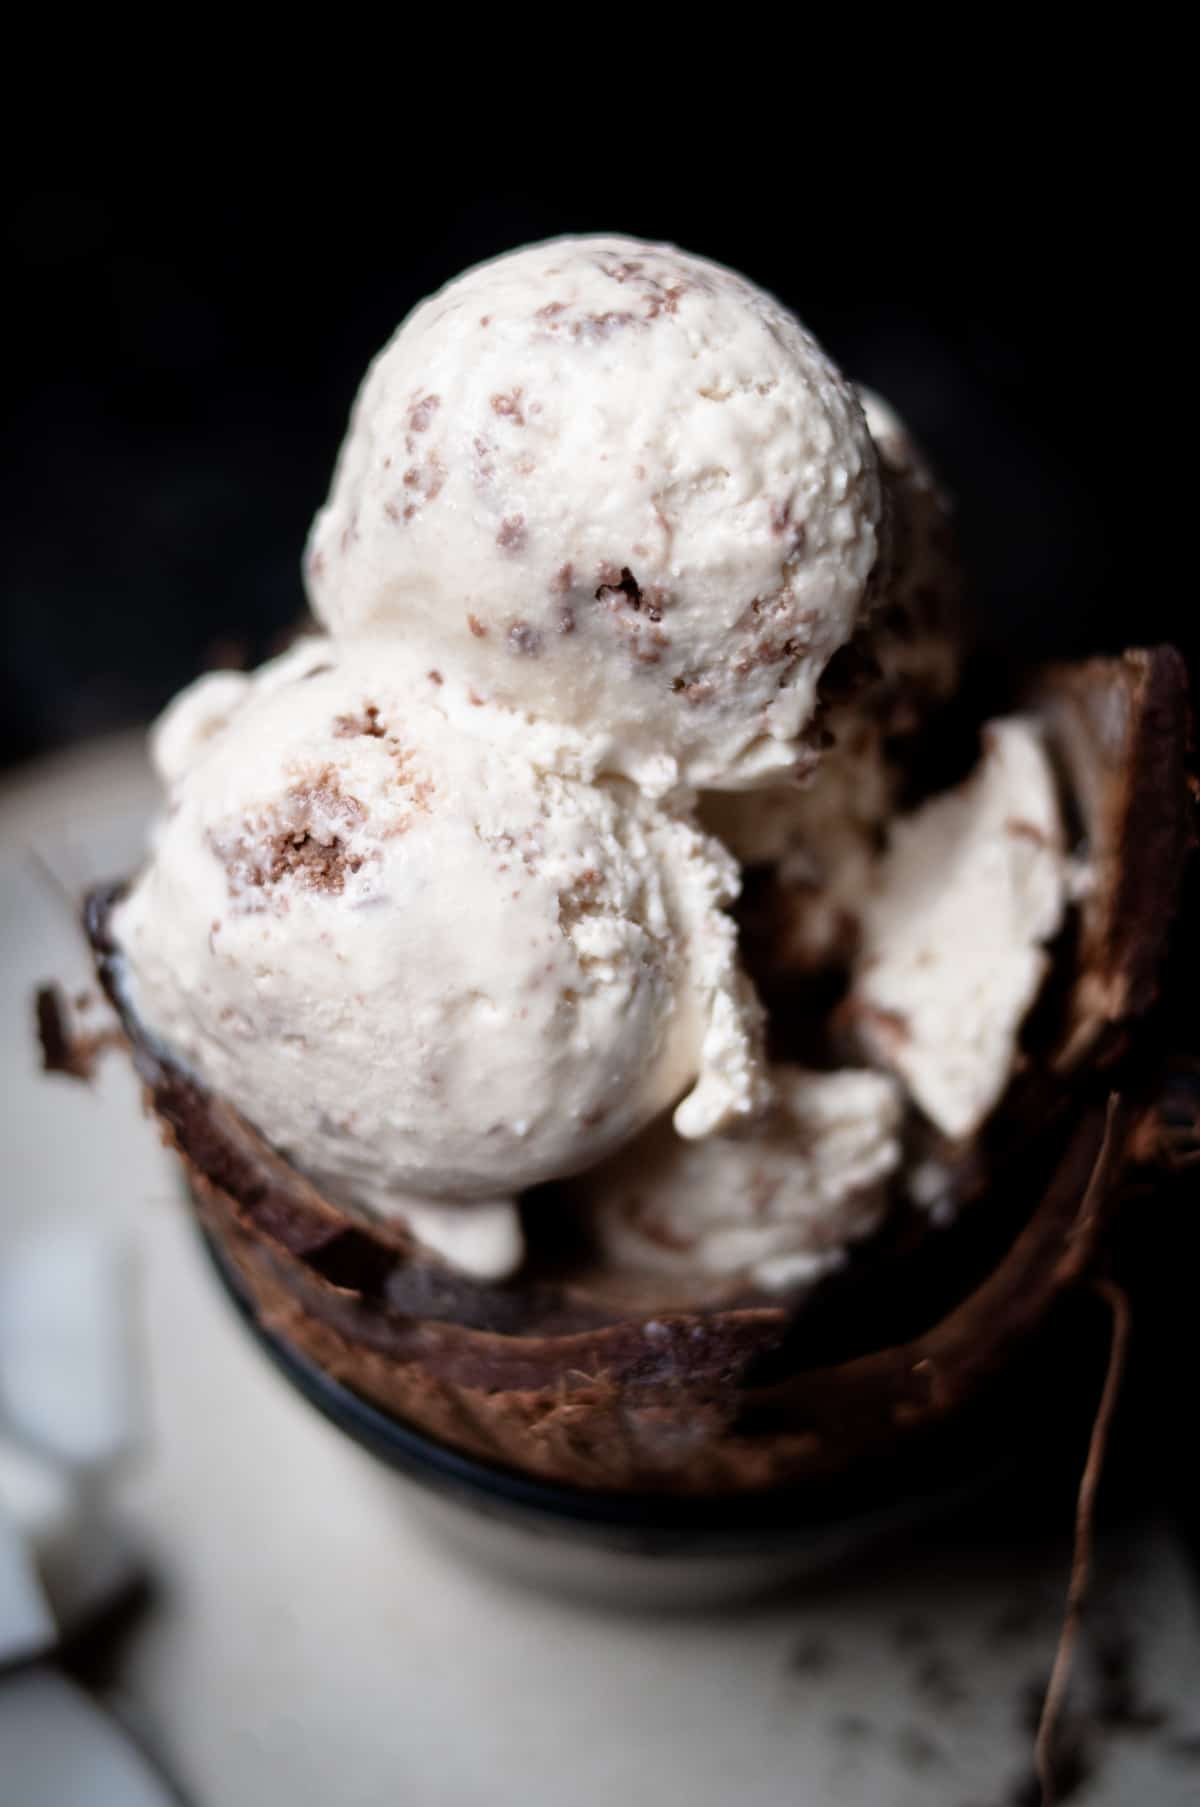 A close up shot of rich creamy coconut bounty ice cream.